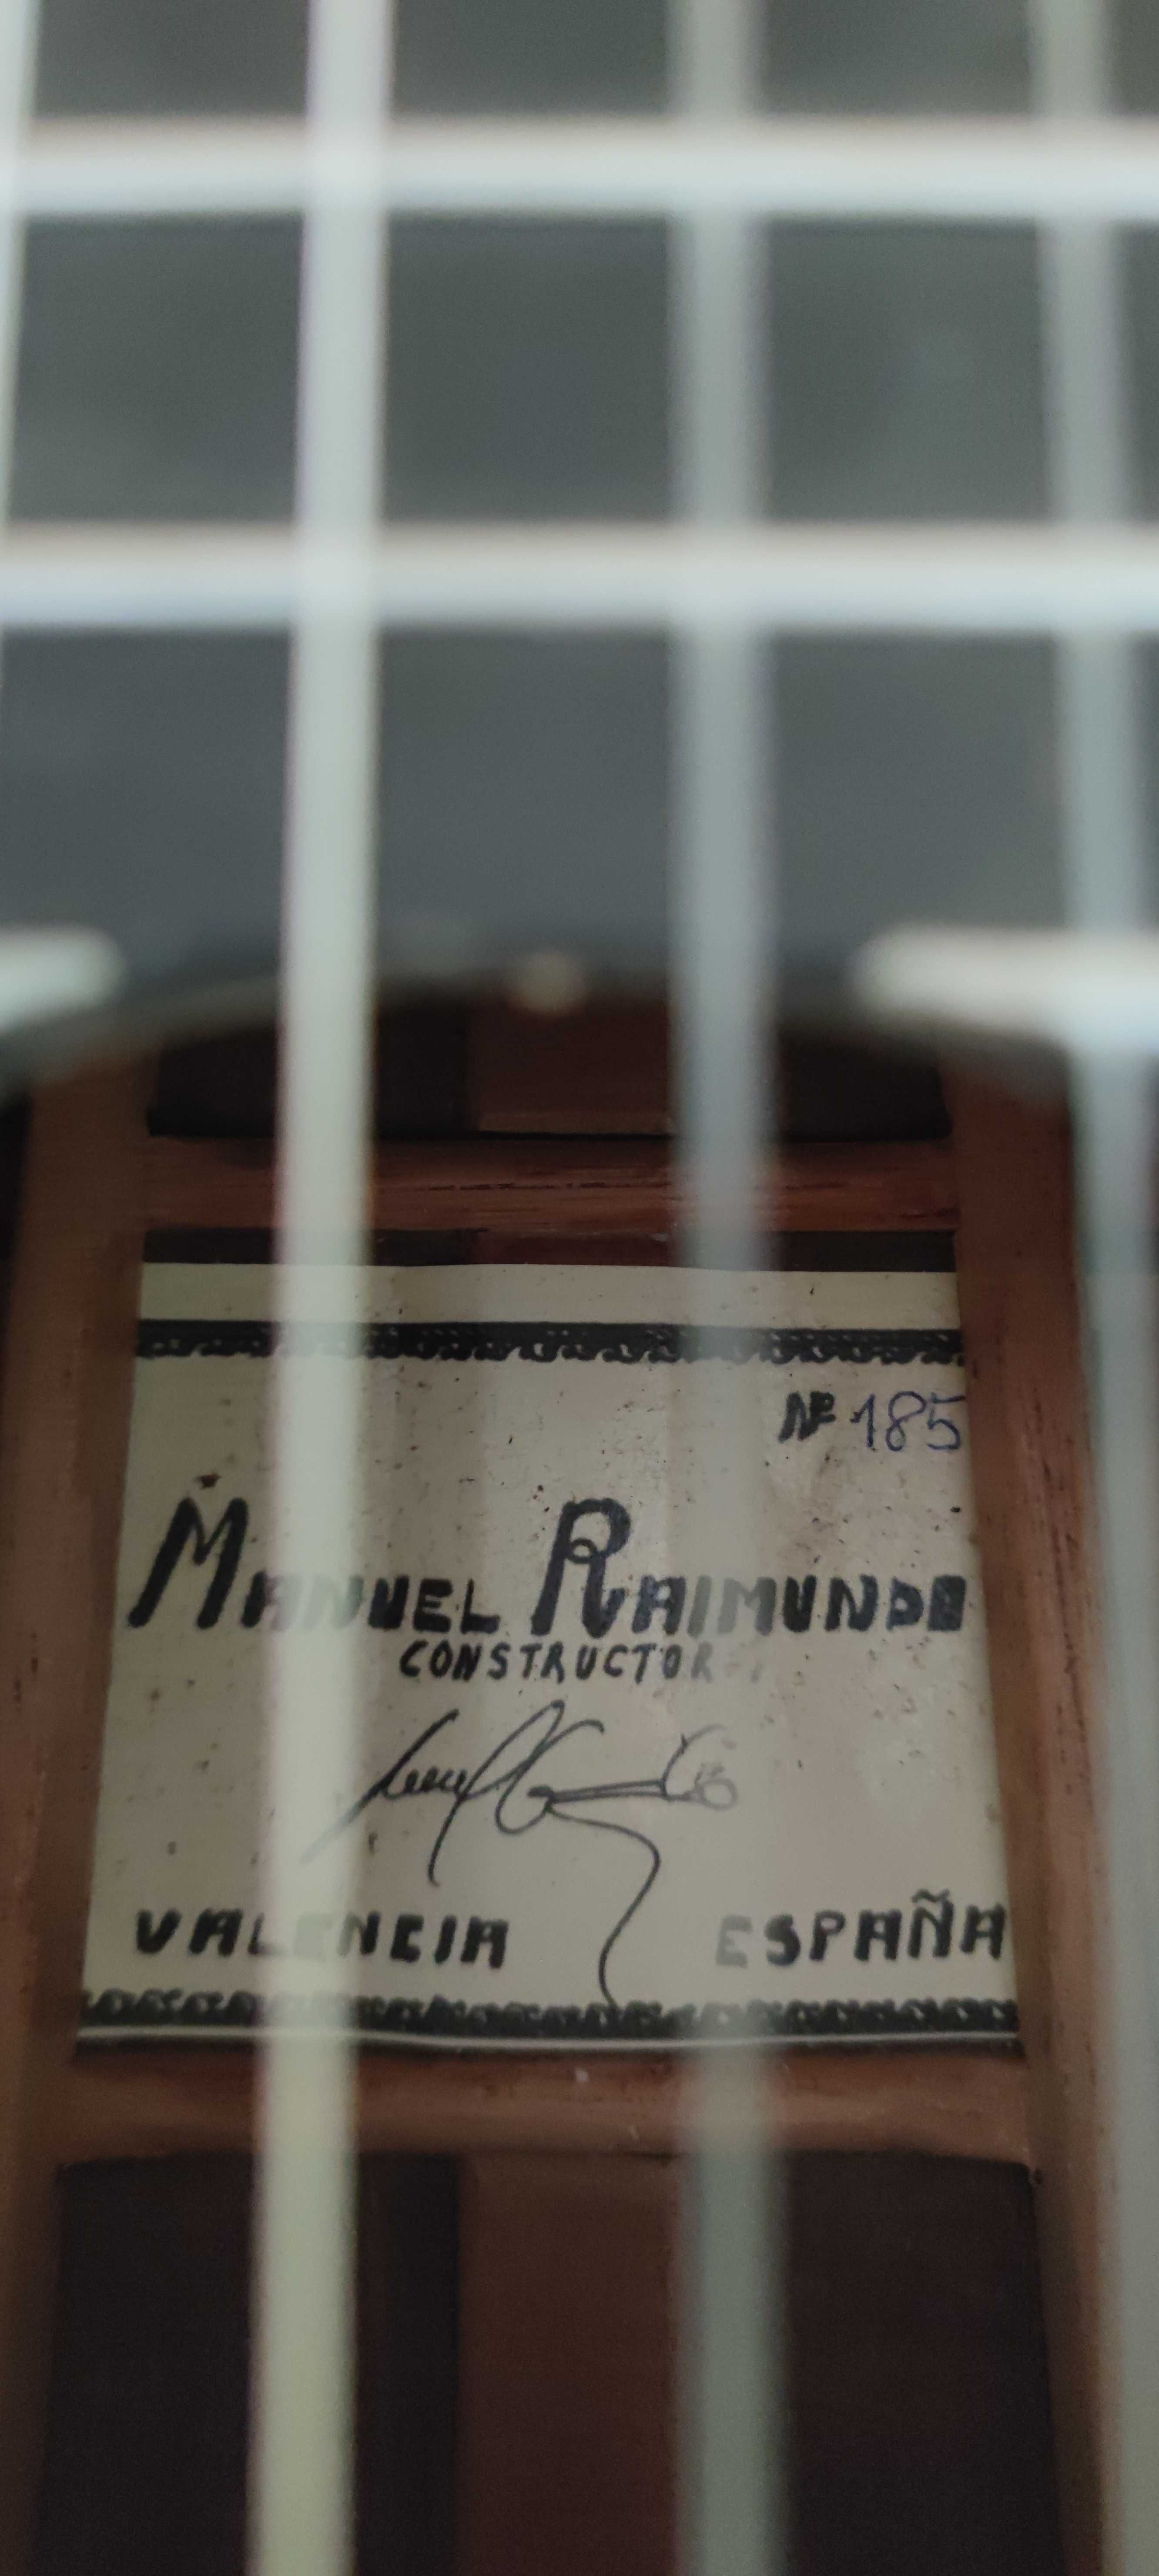 Lutnicza gitara klasyczna Raimundo 185